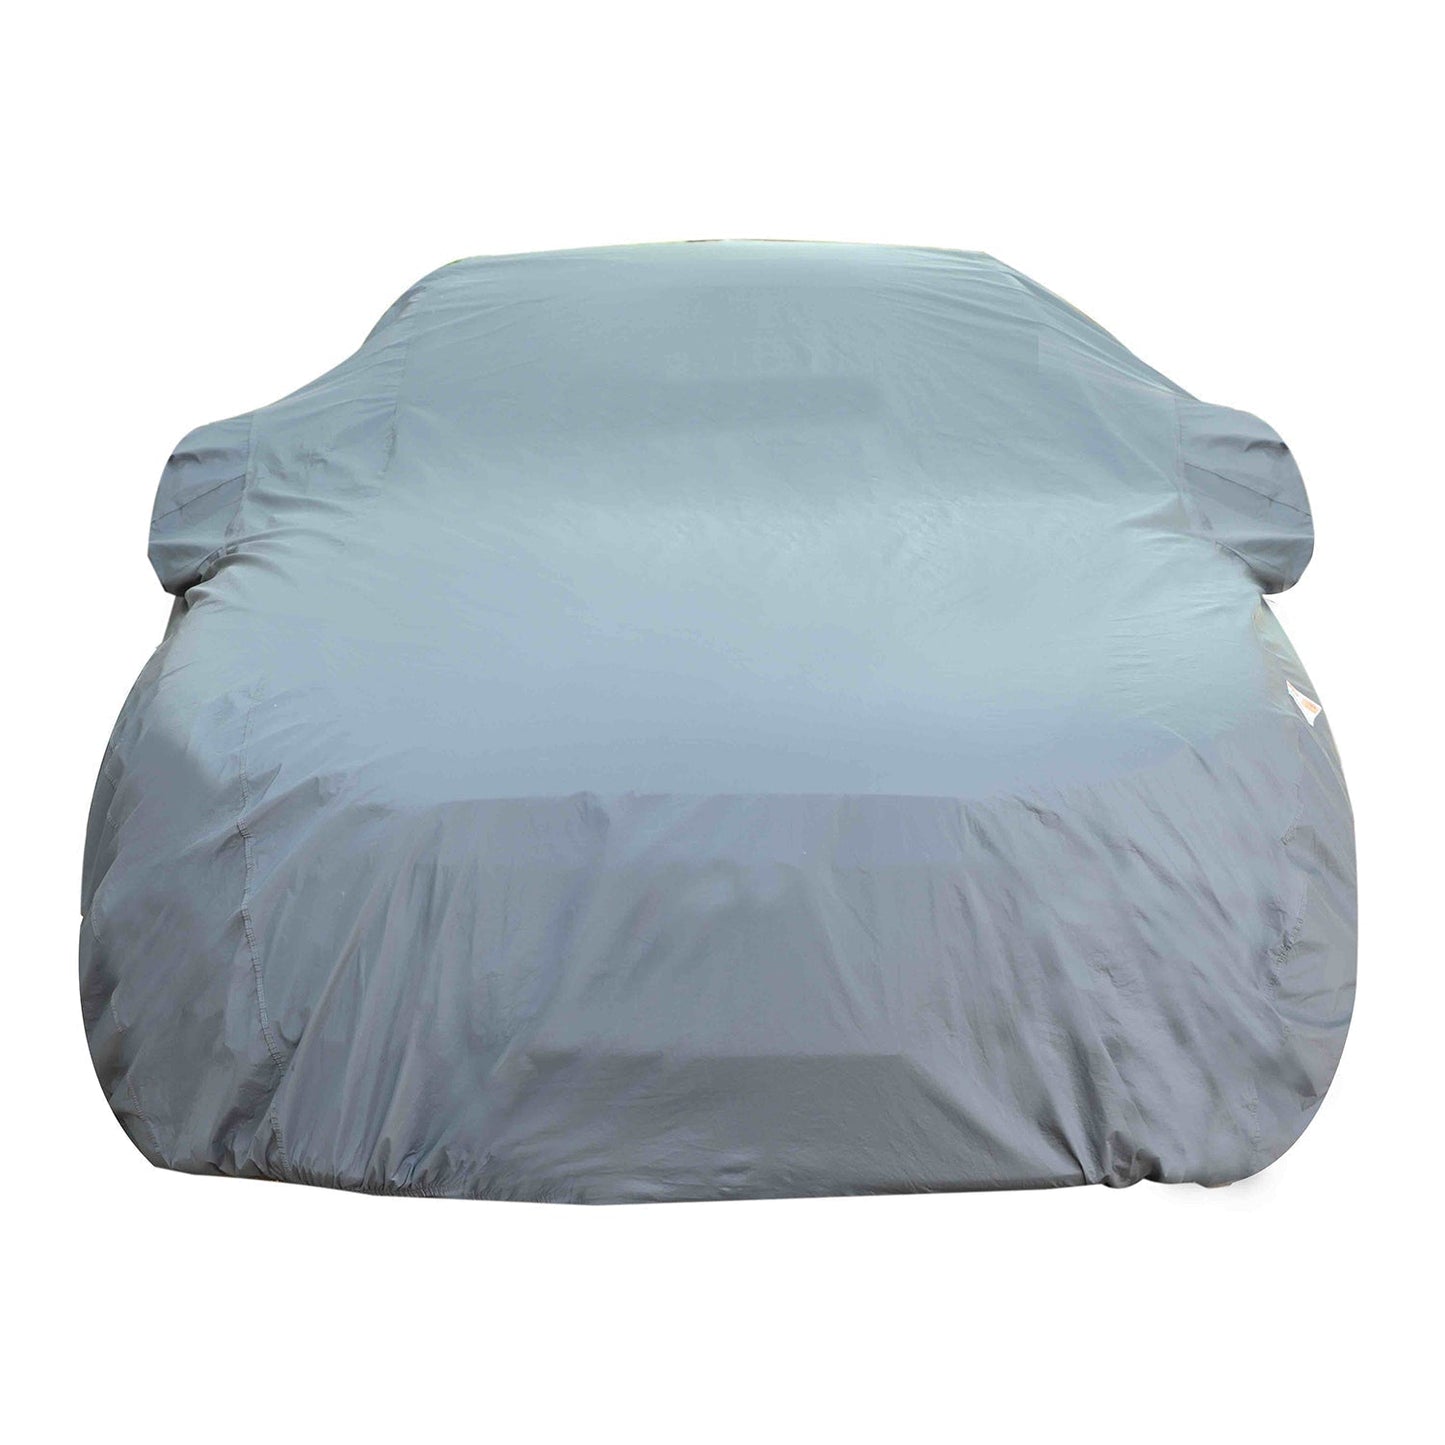 Oshotto Dark Grey 100% Anti Reflective, dustproof and Water Proof Car Body Cover with Mirror Pocket For Maruti Suzuki S-Presso